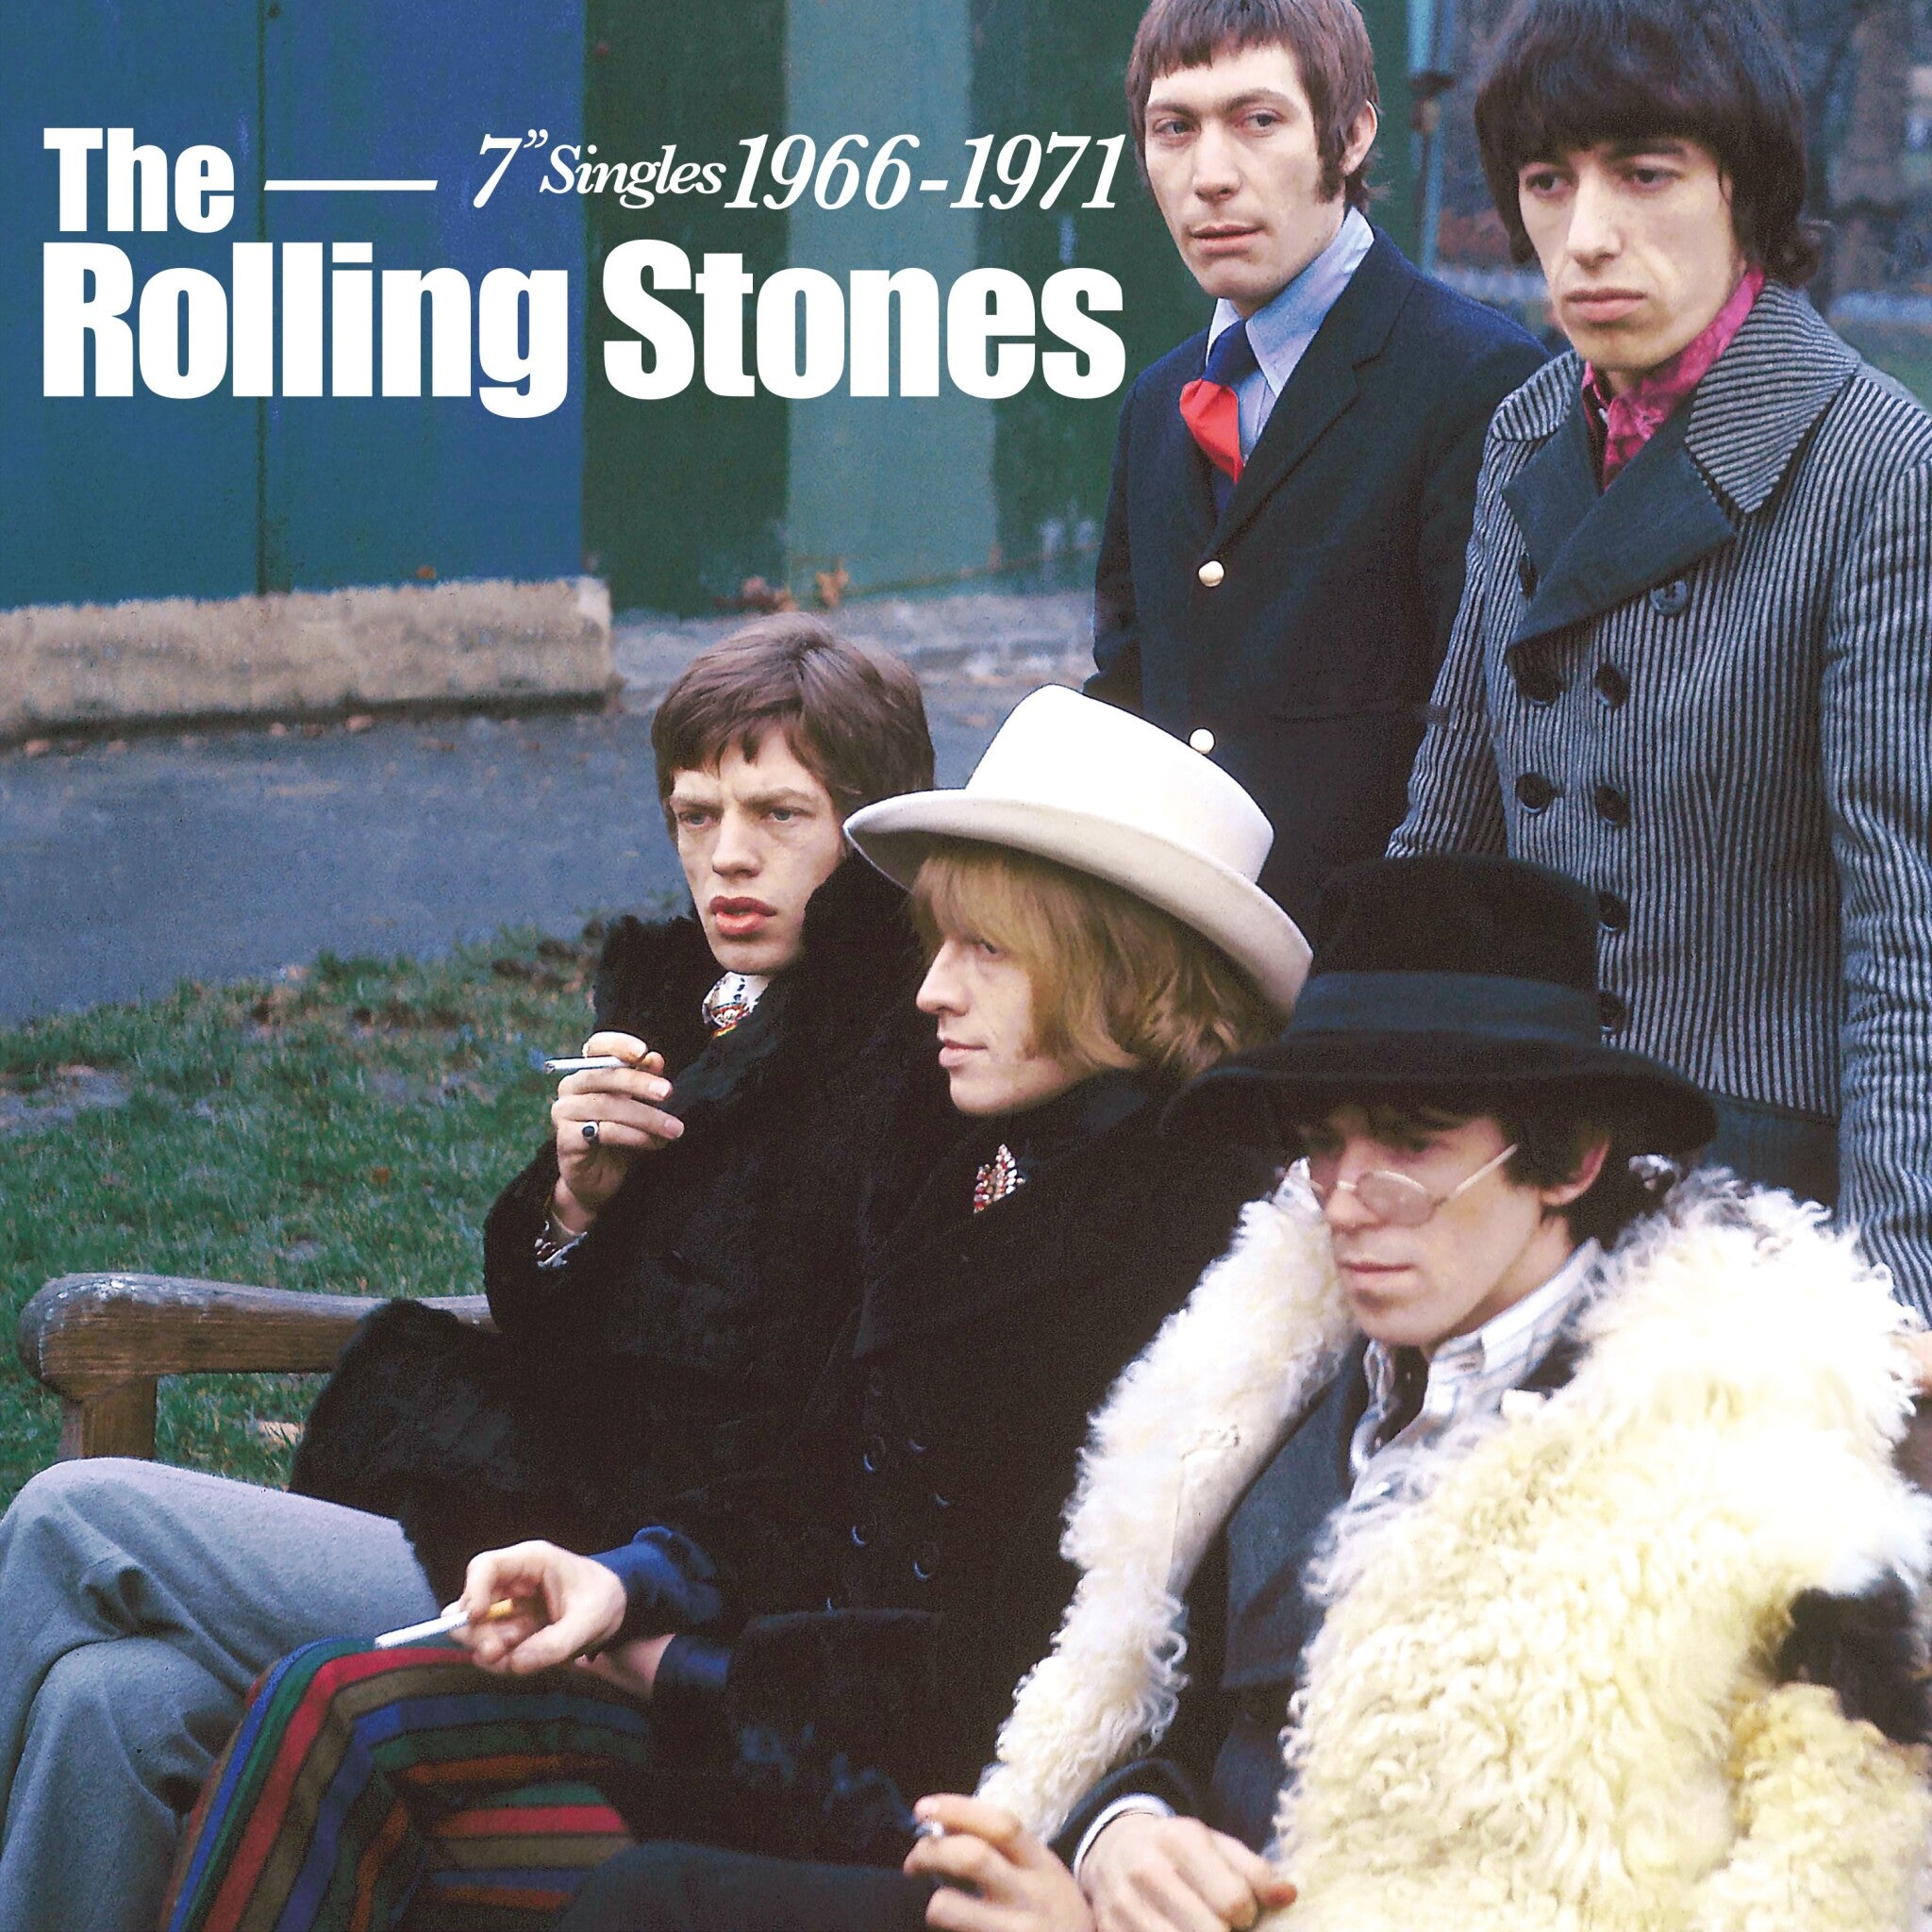 THE ROLLING STONES - 7" Singles Box Volume Two: 1966-1971 - 7" Boxset - Vinyl [FEB 2]